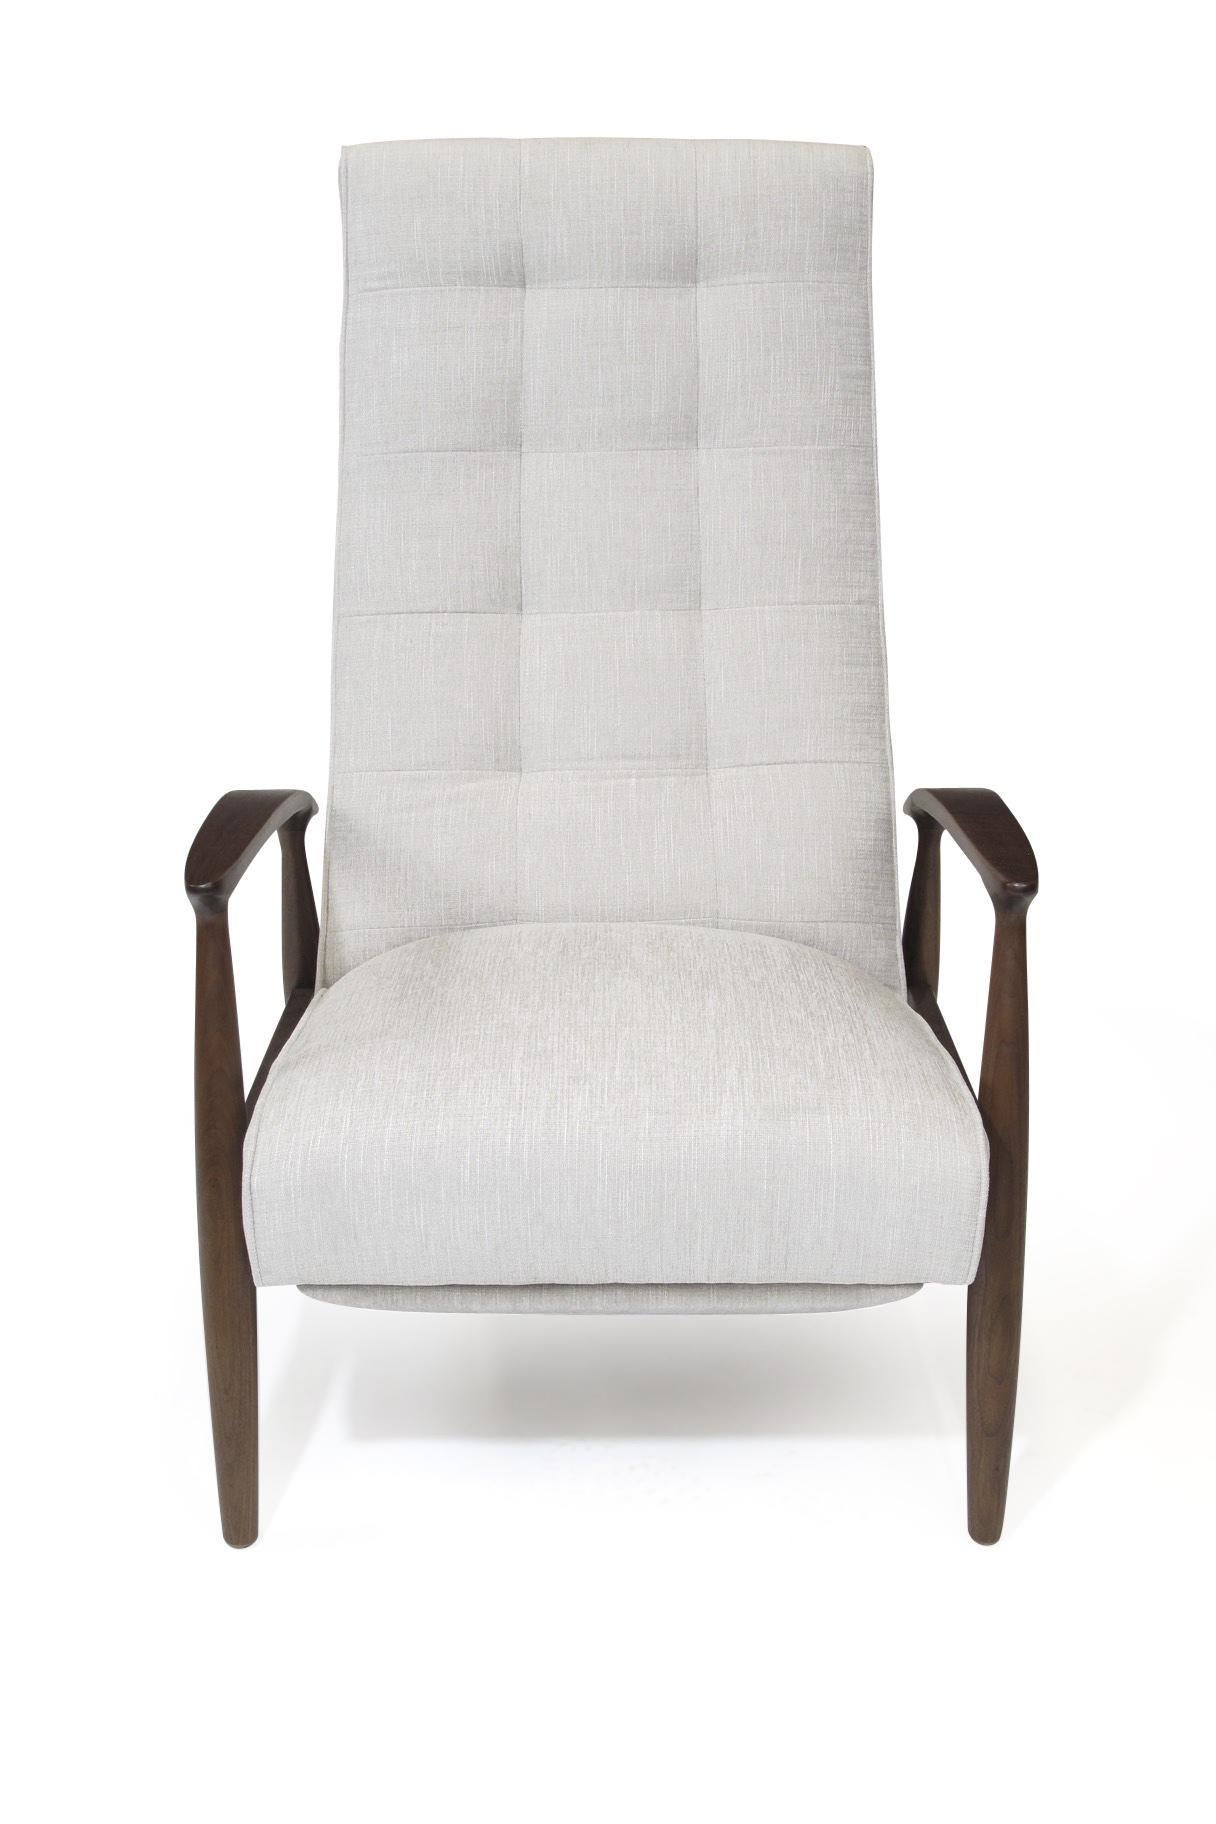 Milo Baughman for Thayer Coggin Recliner Lounge Chair 3